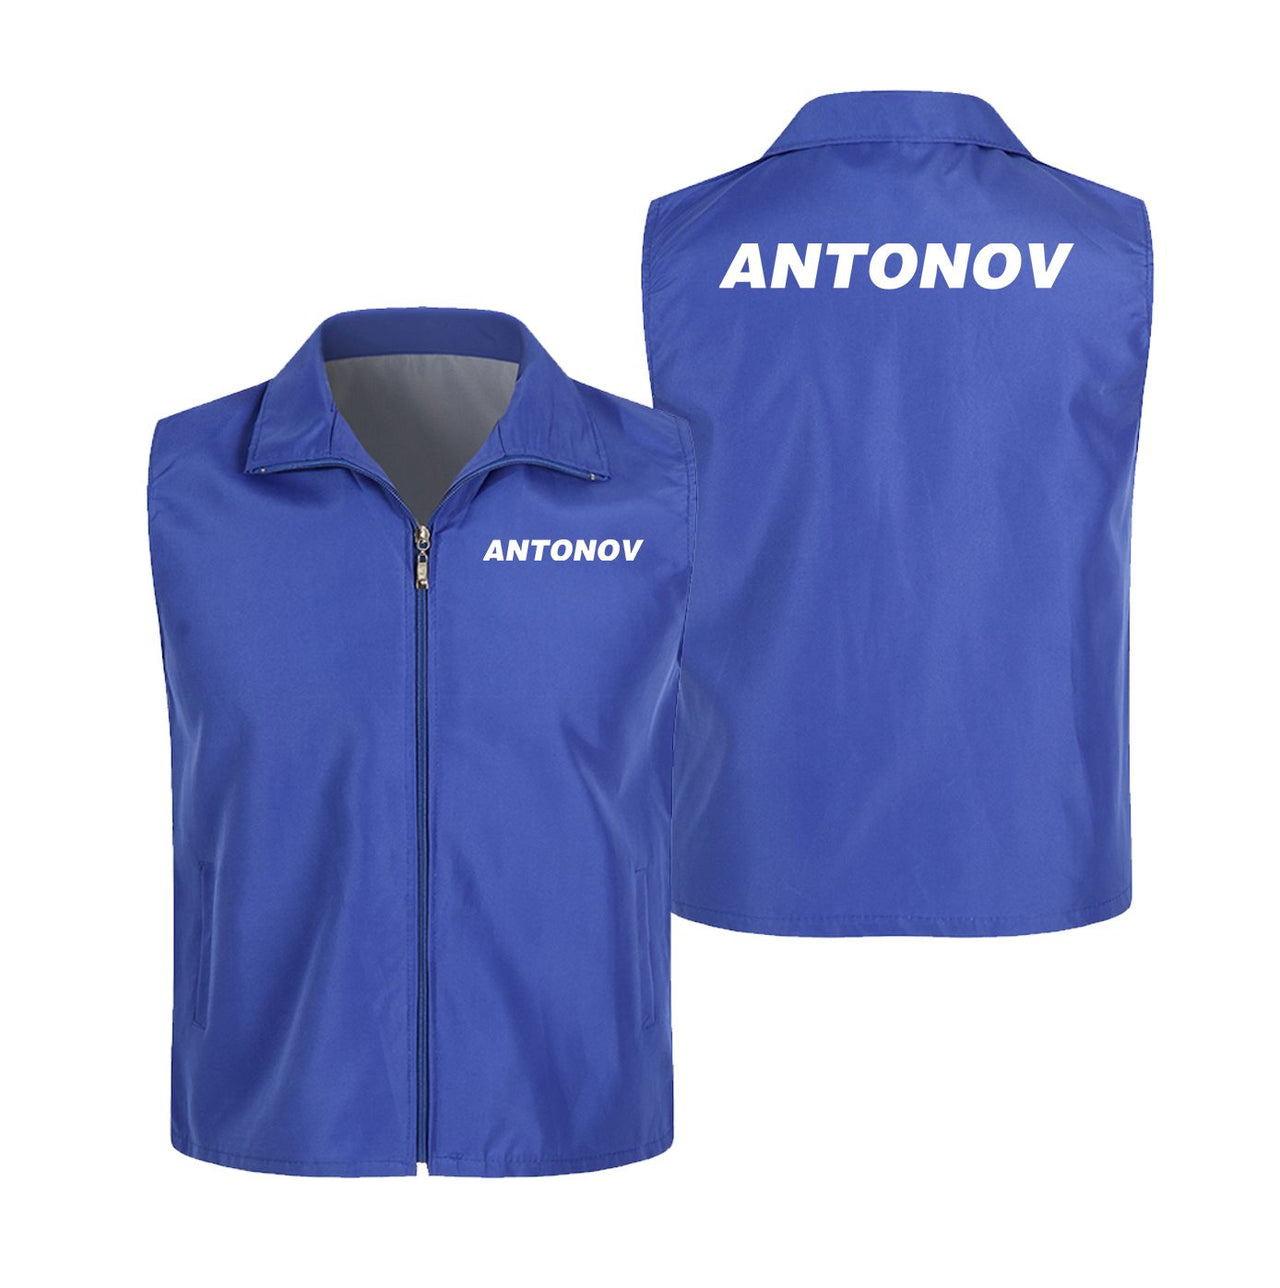 Antonov & Text Designed Thin Style Vests